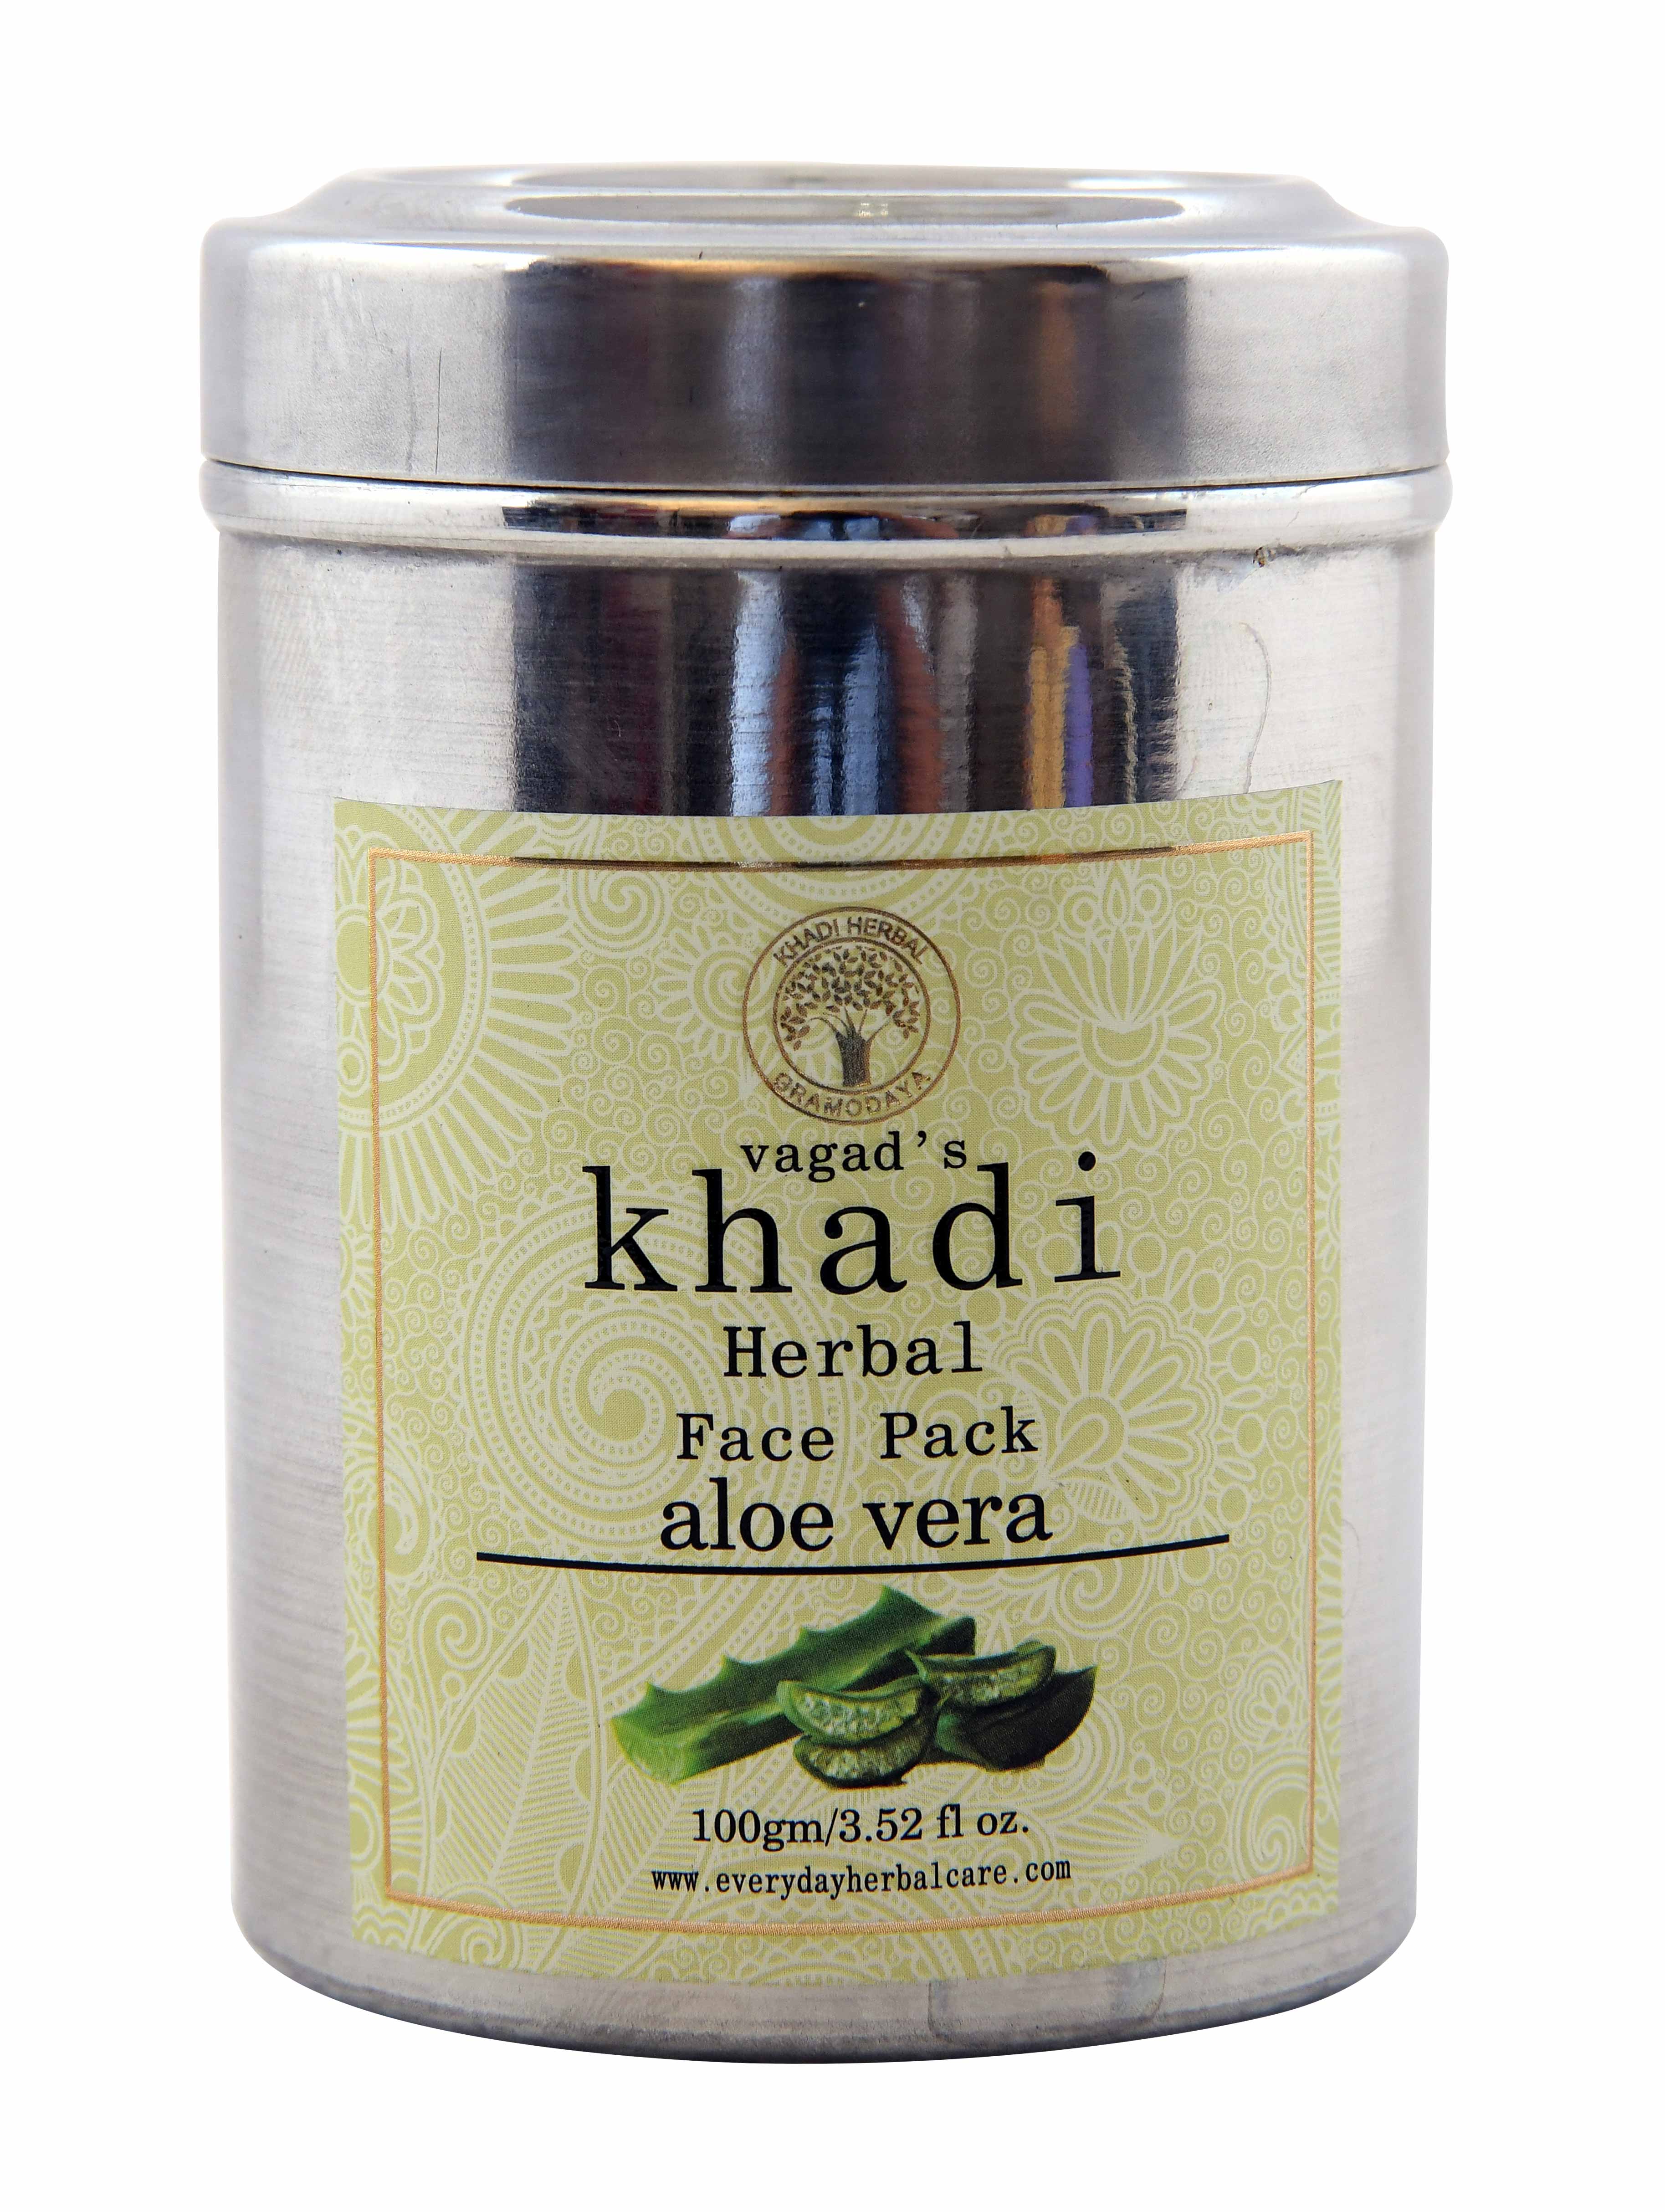 Vagad's Khadi Aloe Vera Face Pack